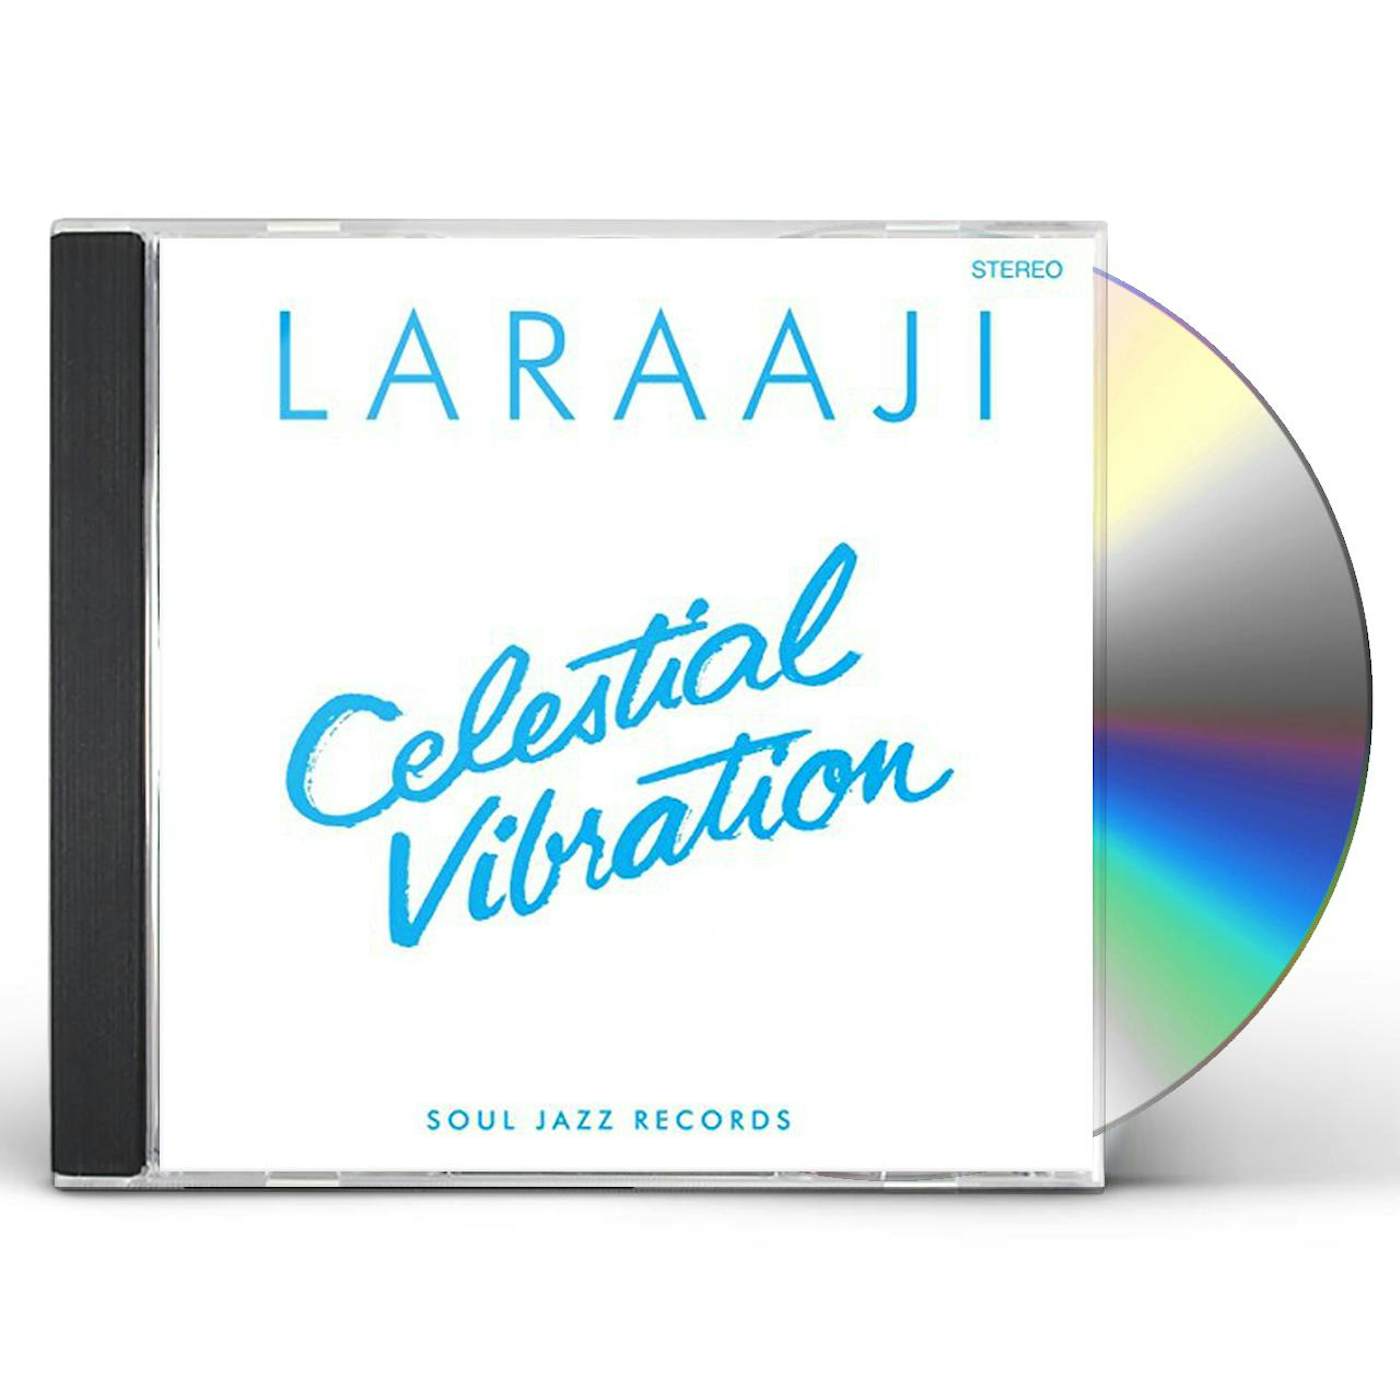 Laraaji CELESTIAL VIBRATION CD